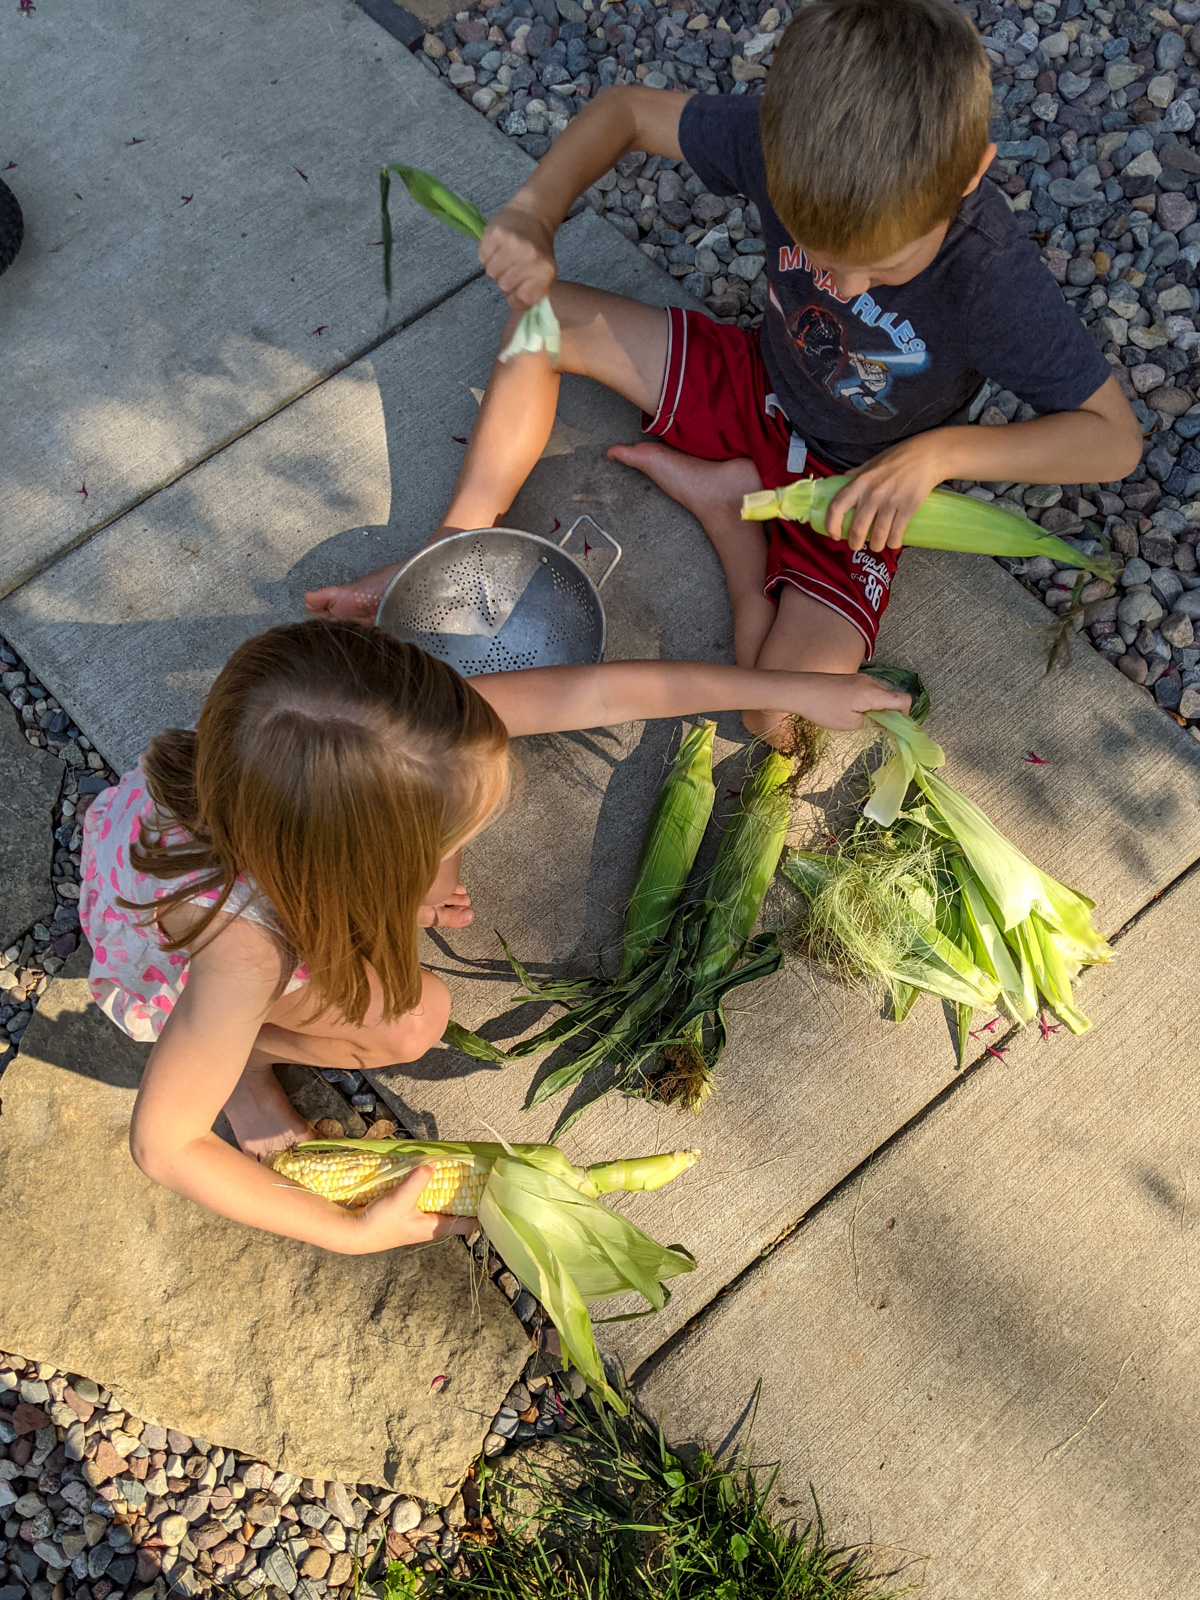 Kids shucking corn on the cob.